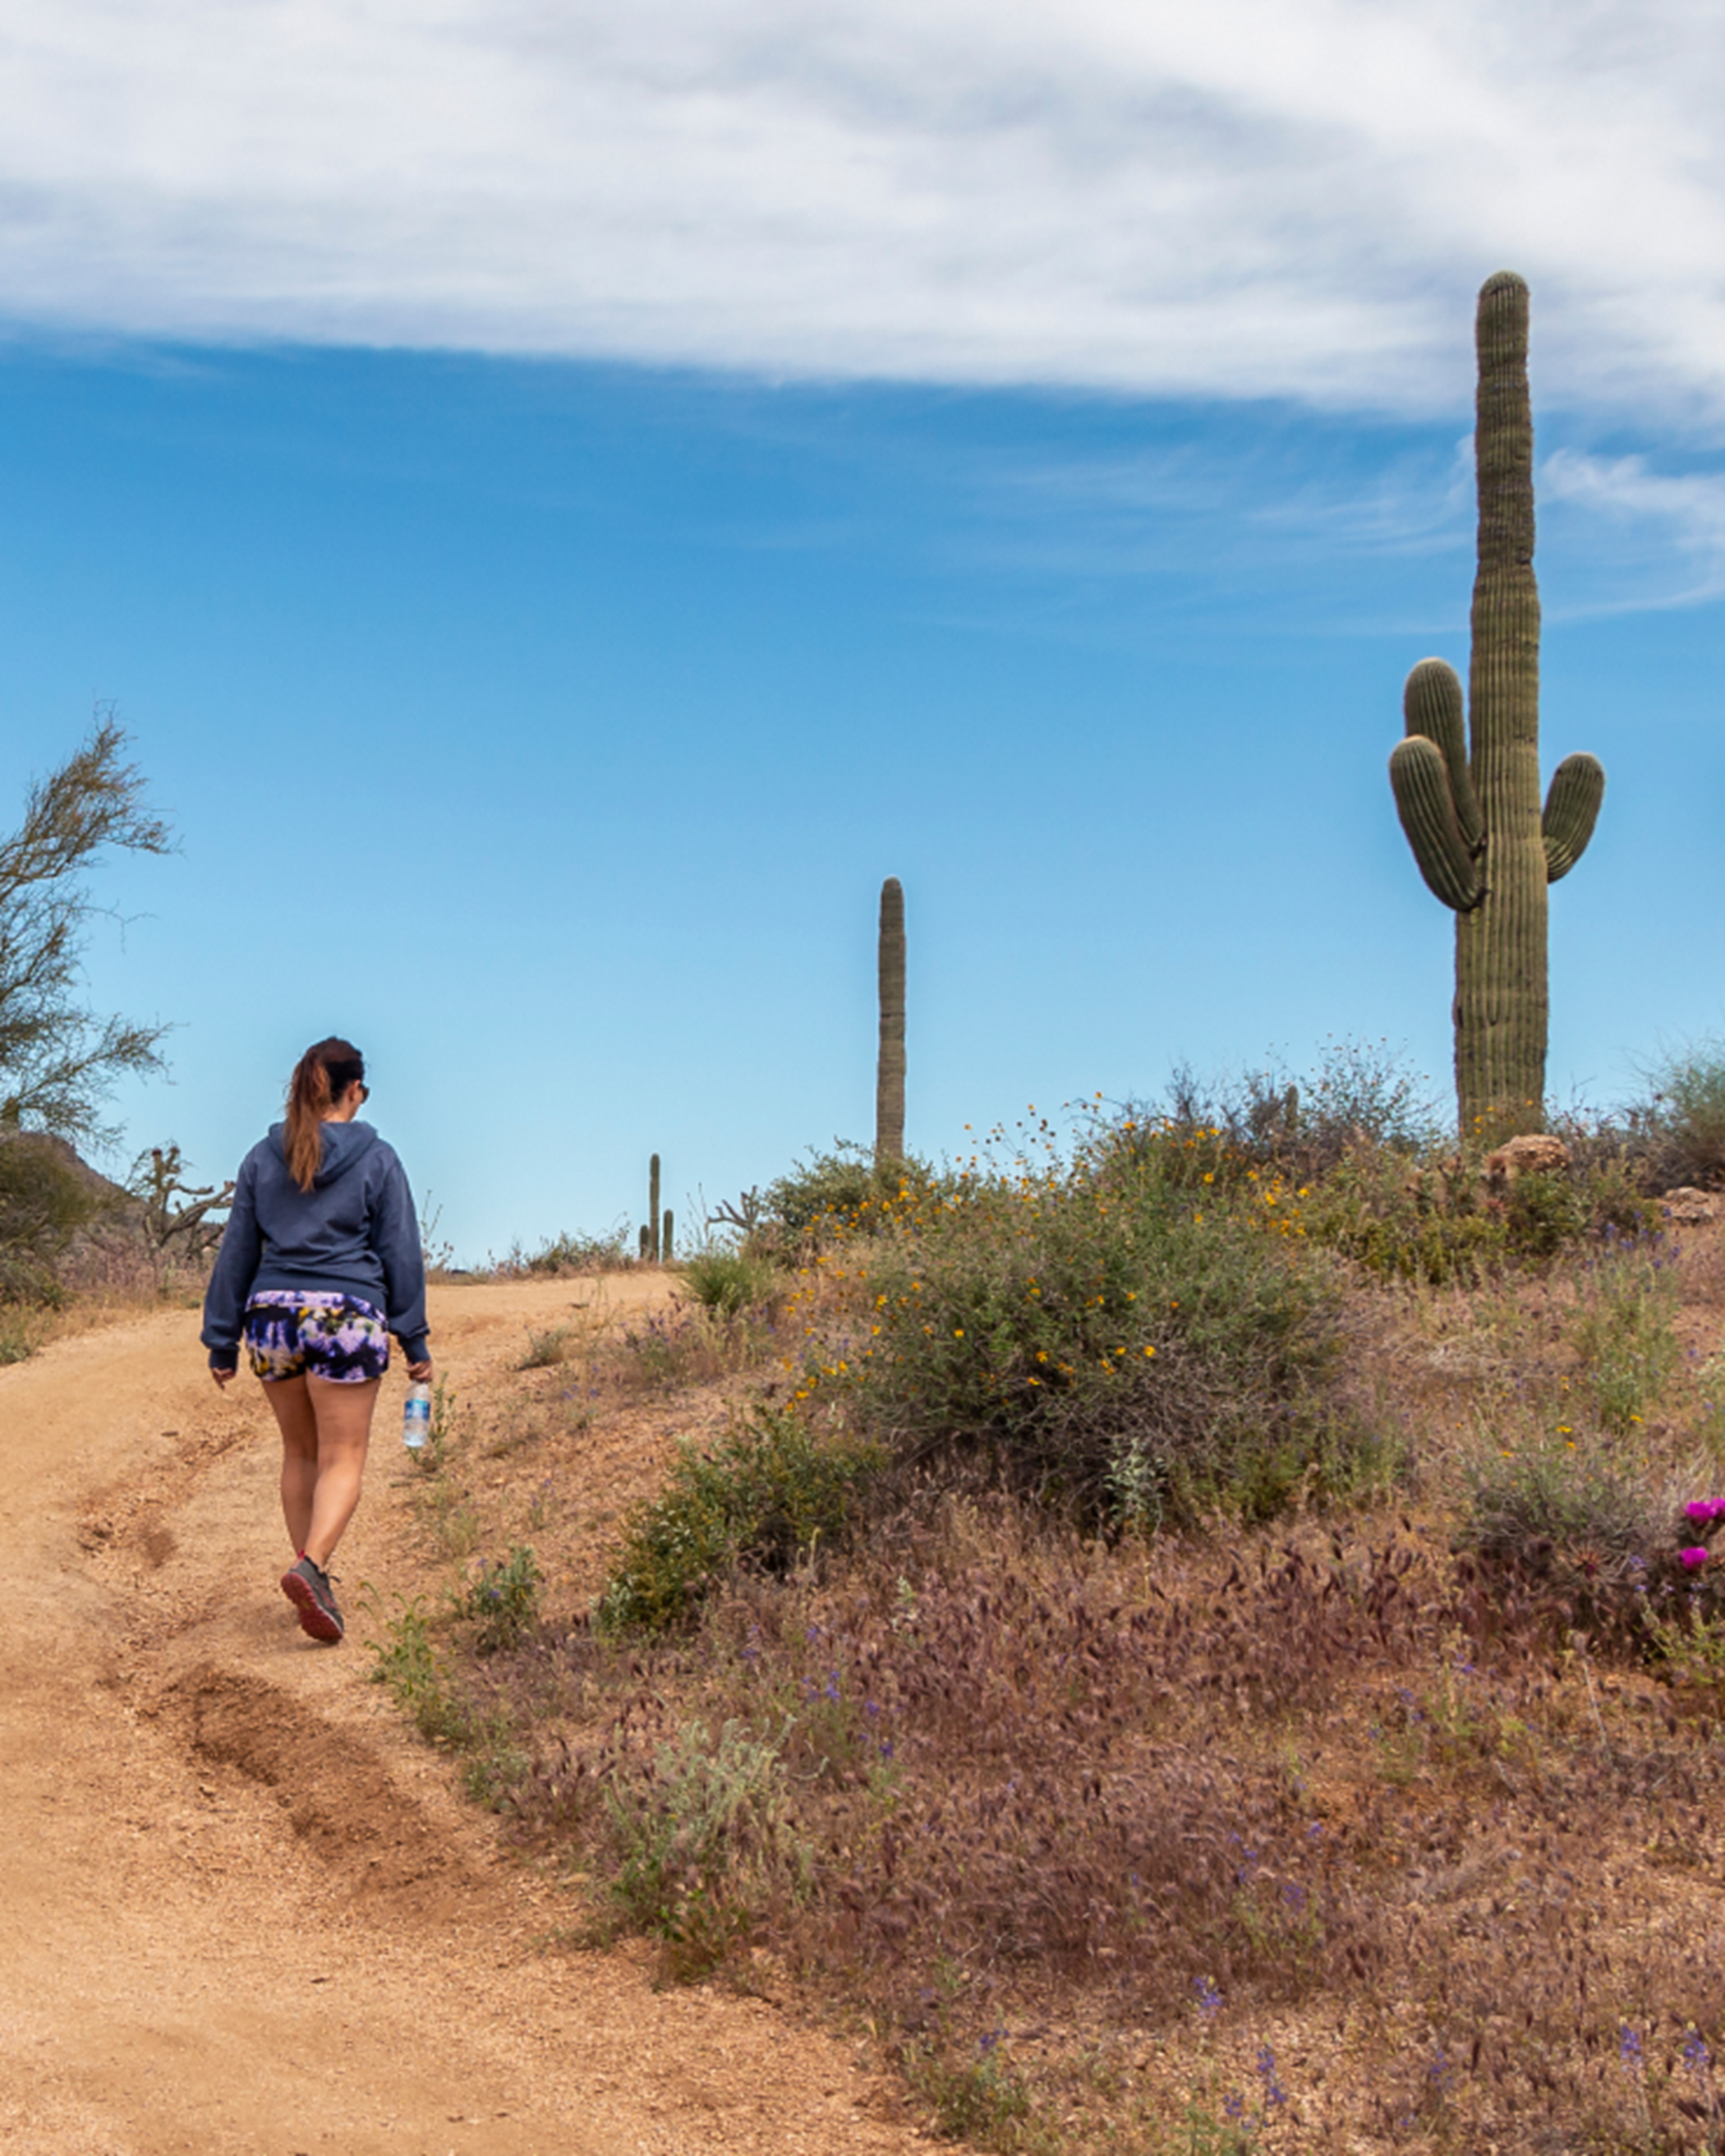 Girl hiking on desert path